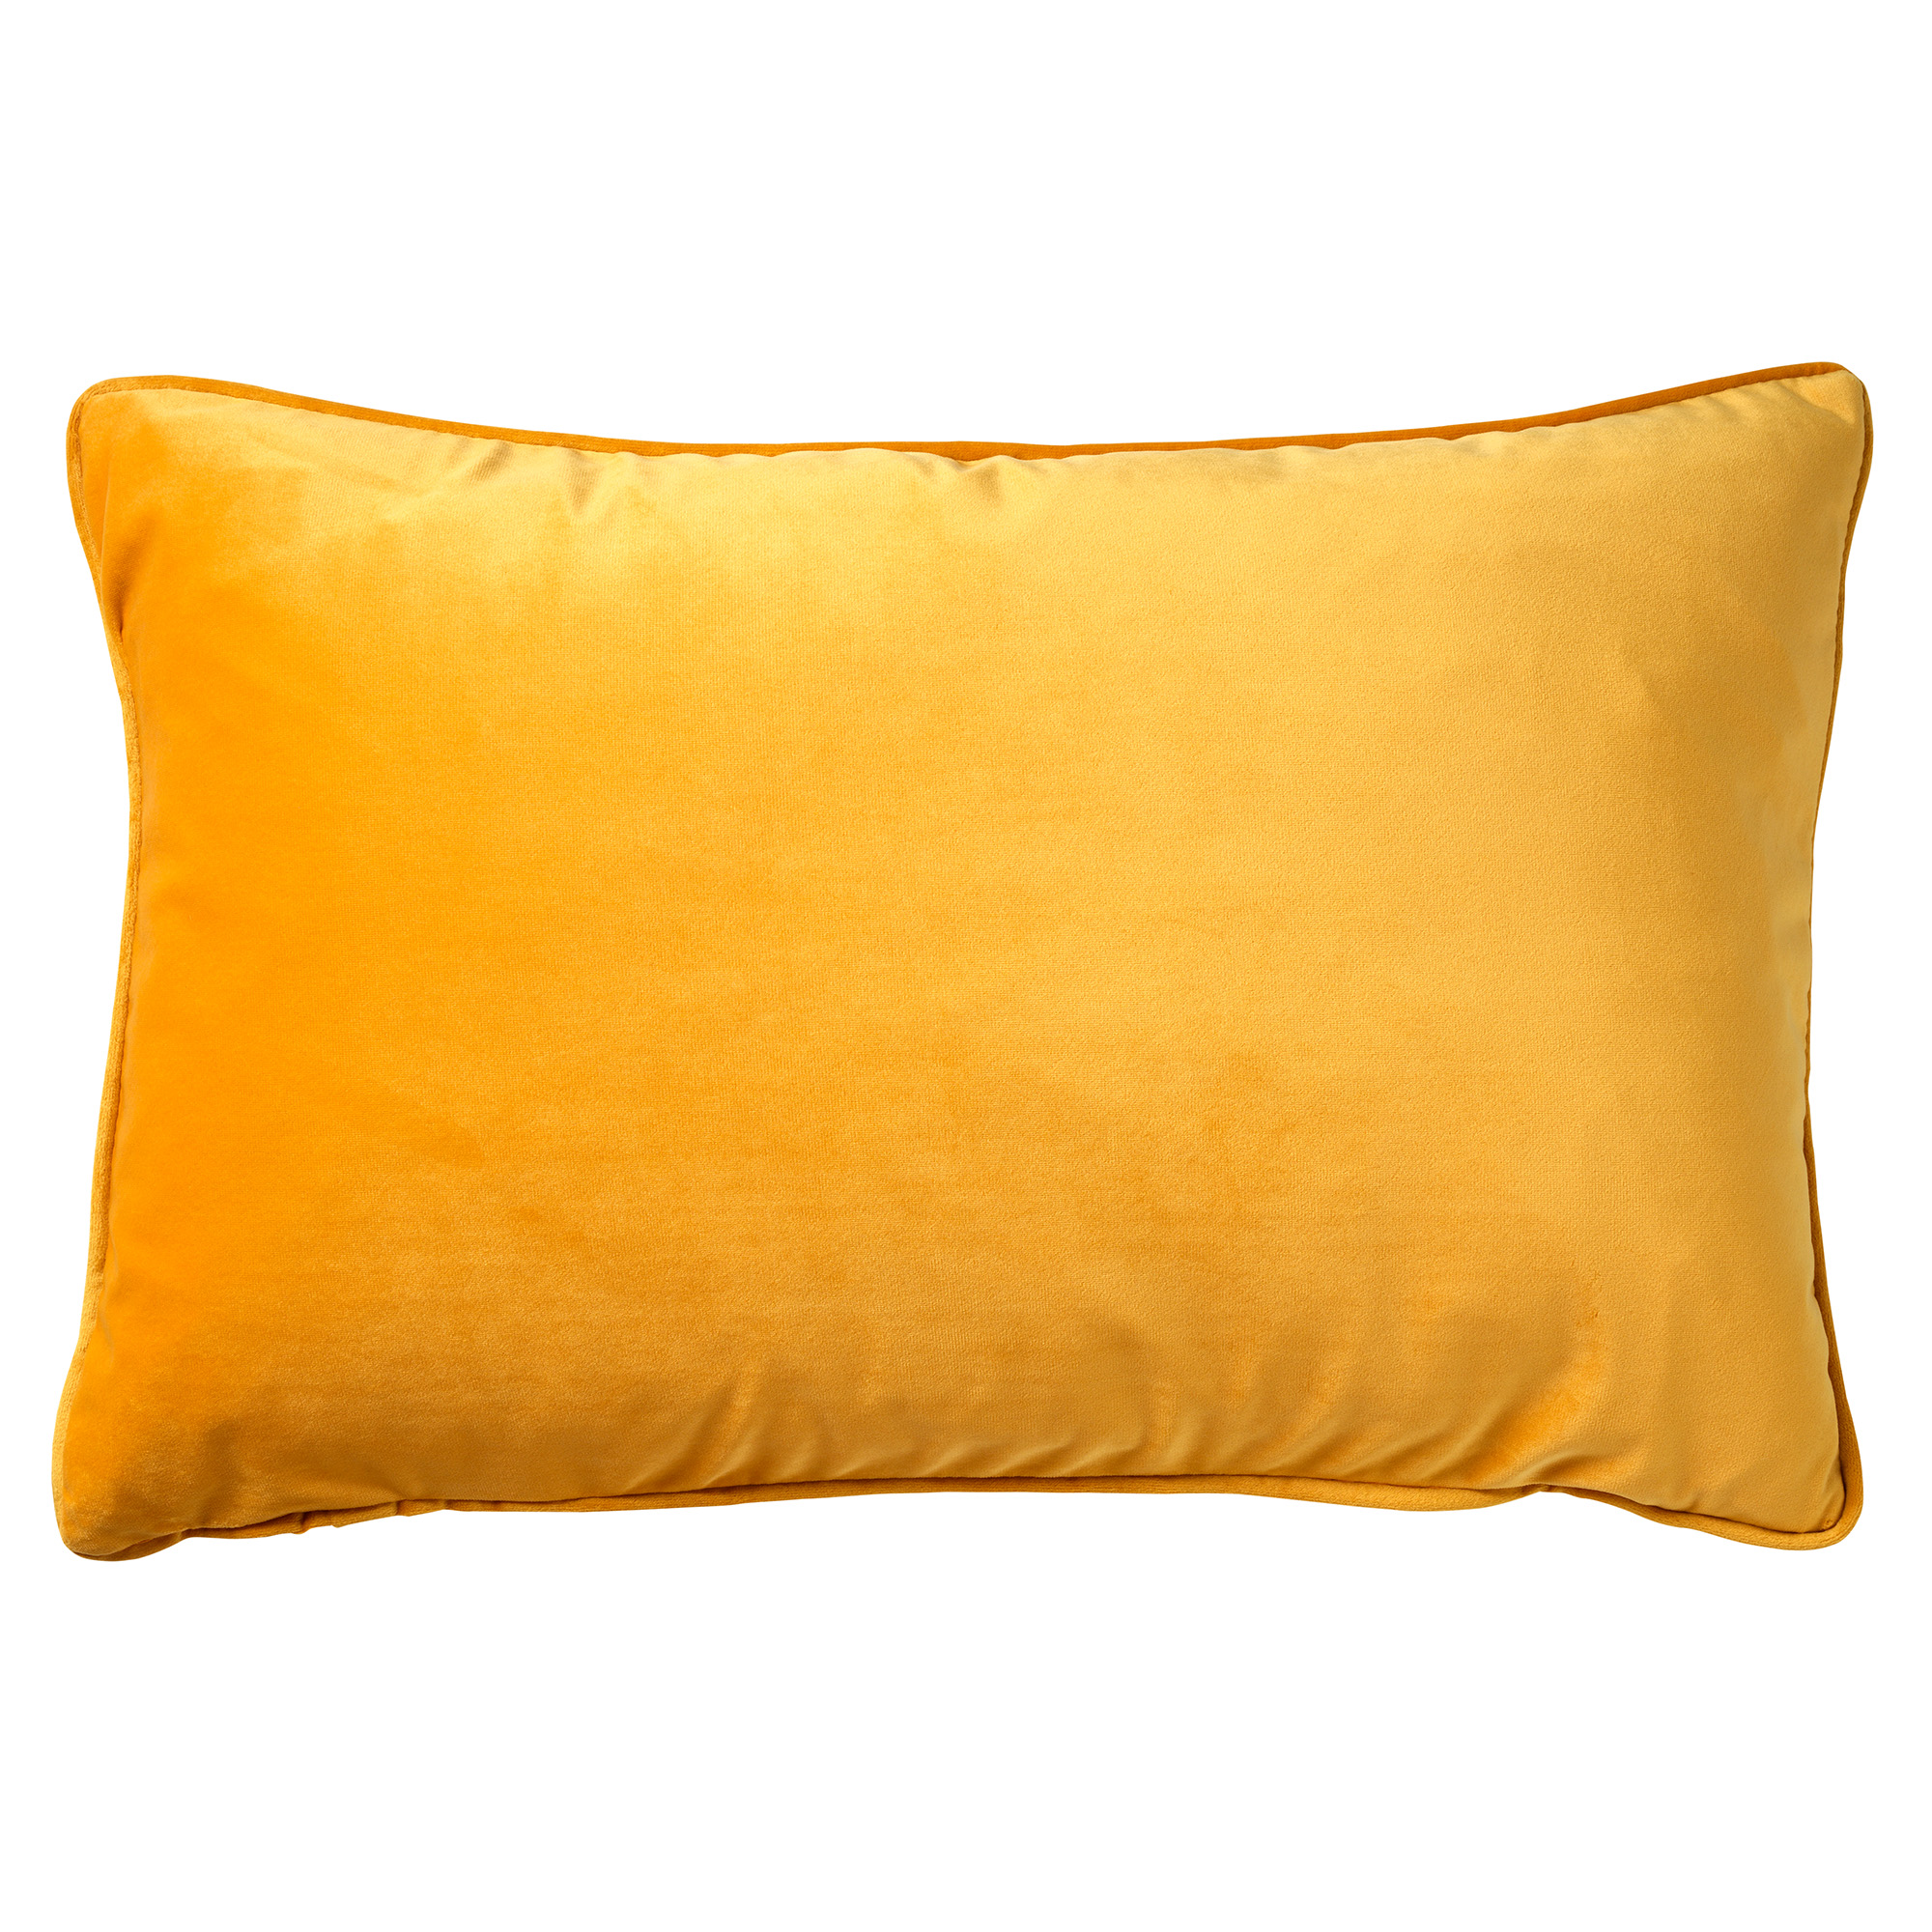 FINN - Cushion velvet 40x60 cm - Golden Glow - yellow-ochre